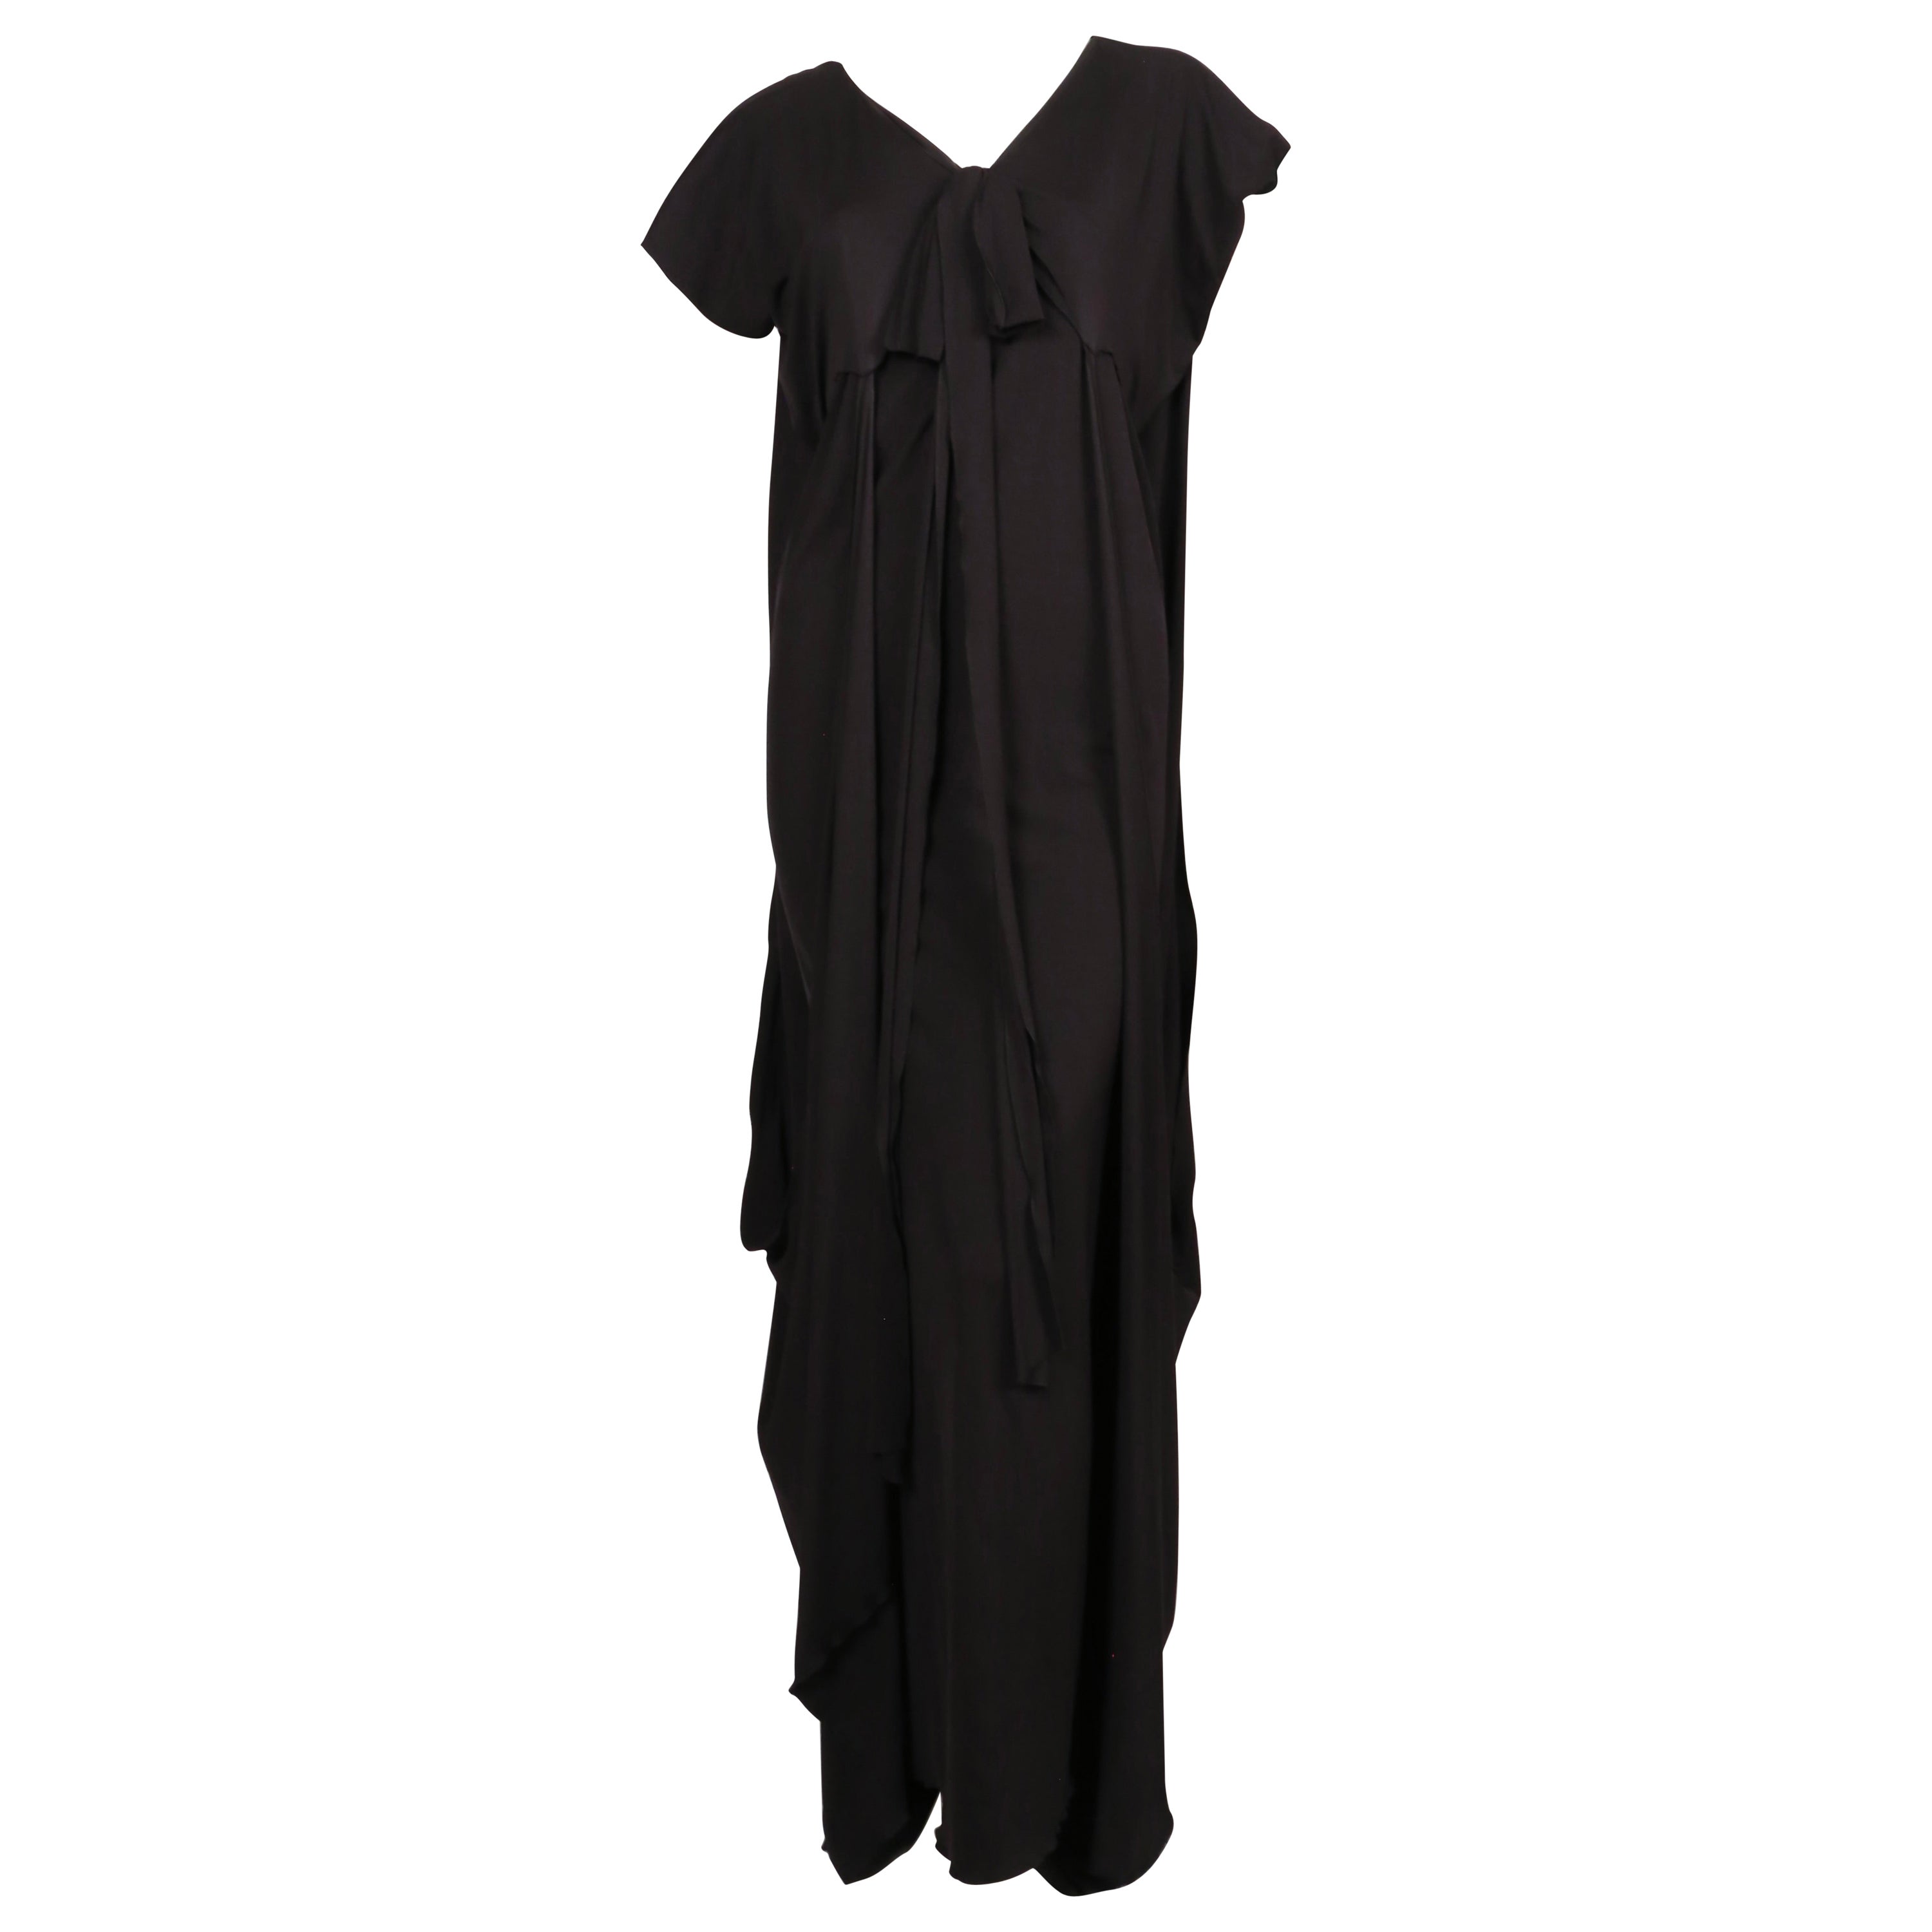 YVES SAINT LAURENT by Stefano Pilati black draped caftan dress For Sale